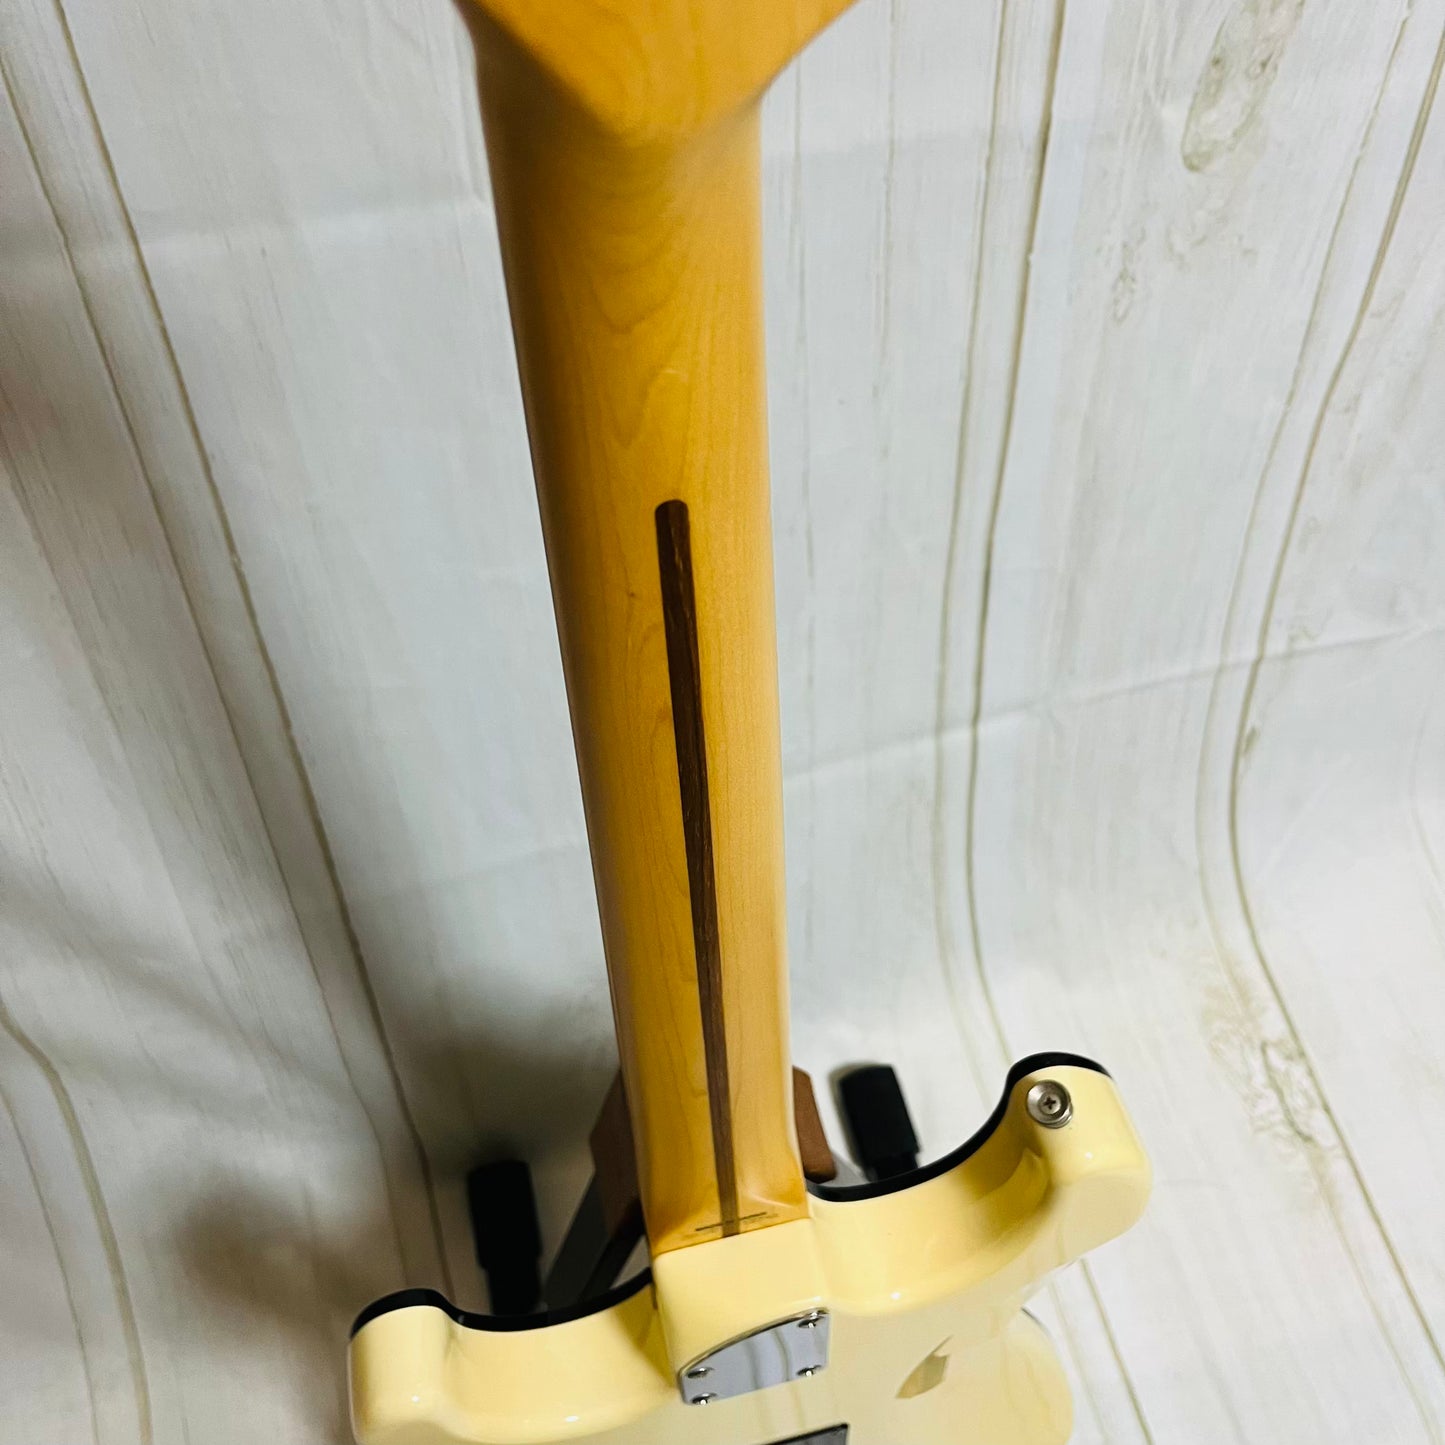 2012 Fender Aerodyne Stratocaster AST-75M Medium Scale 24 3/4" Olympic White, Japan MIJ